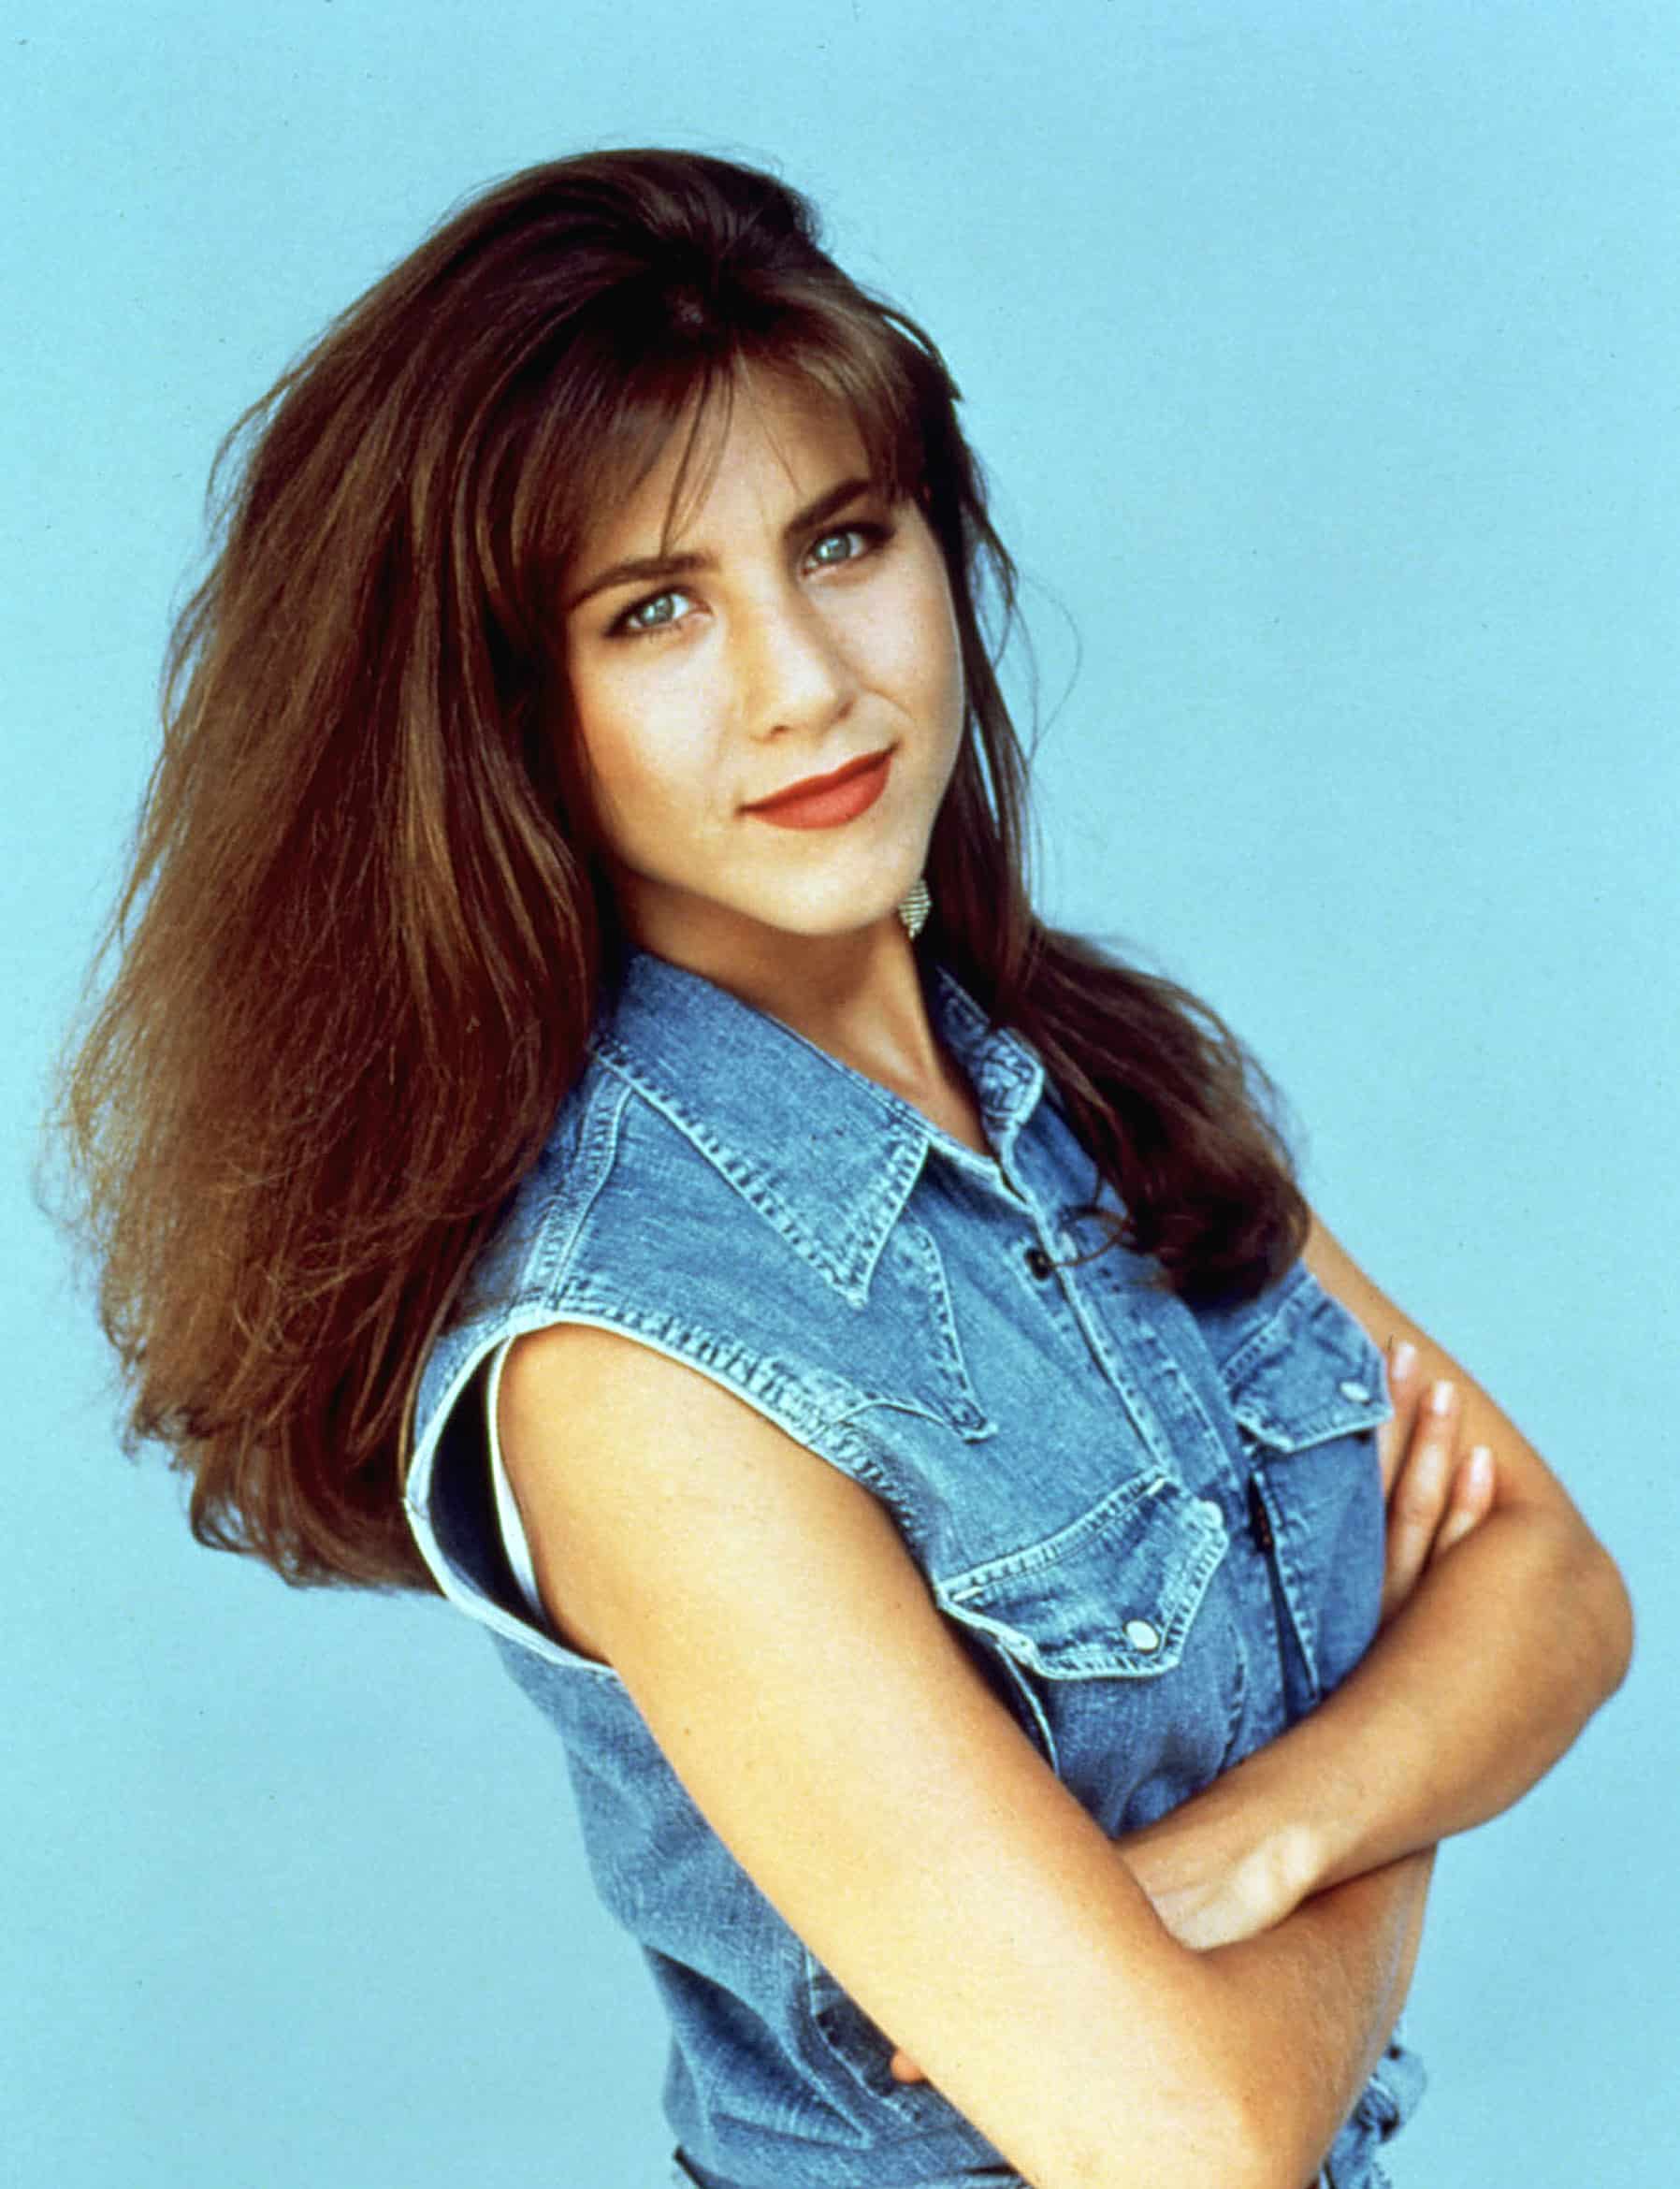 THE EDGE, Jennifer Aniston, 1992-1993